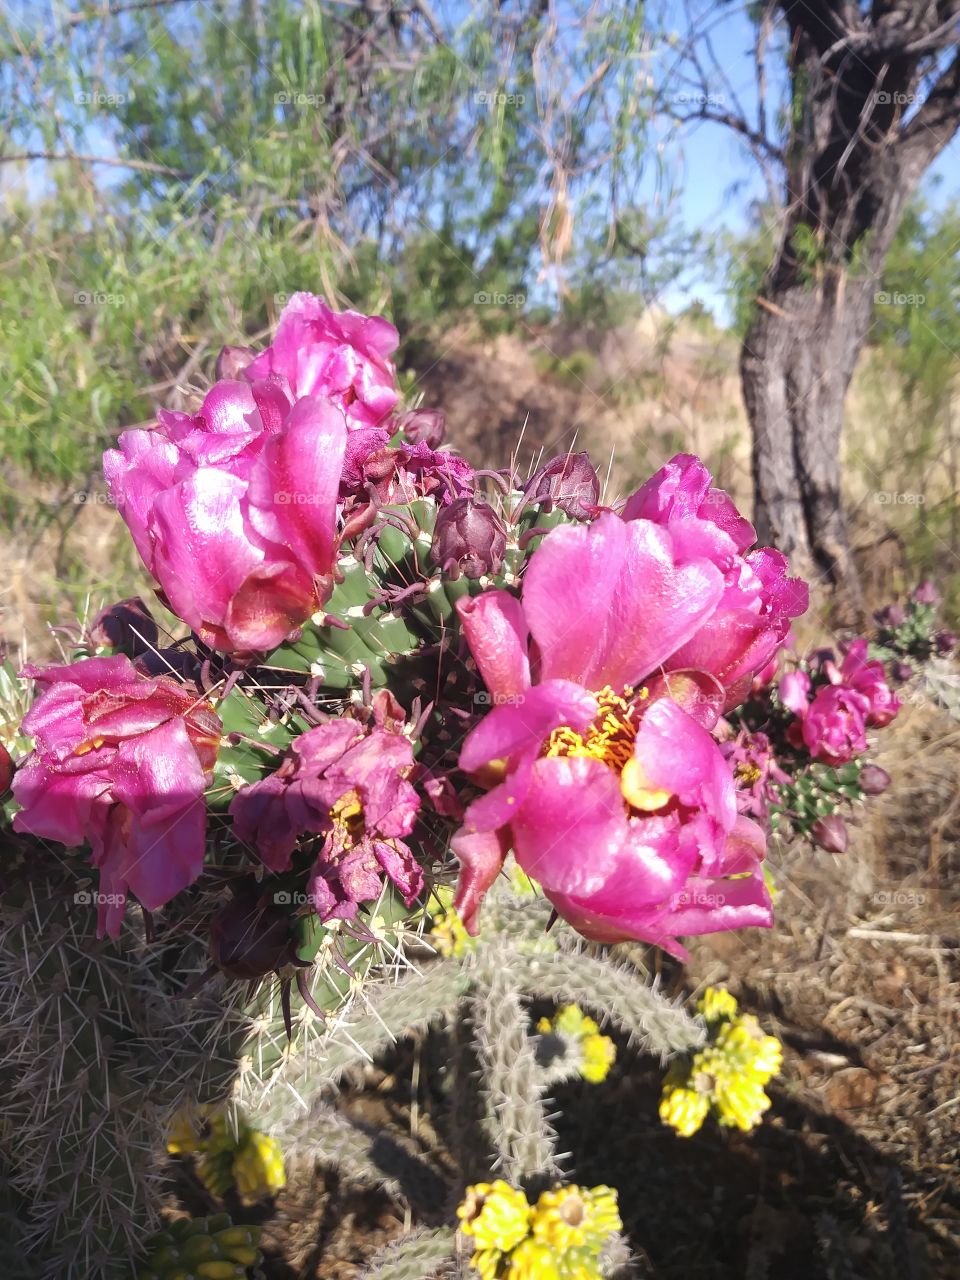 flower red petal yellow pistal cactus cholla desert arid Sonora Arozona